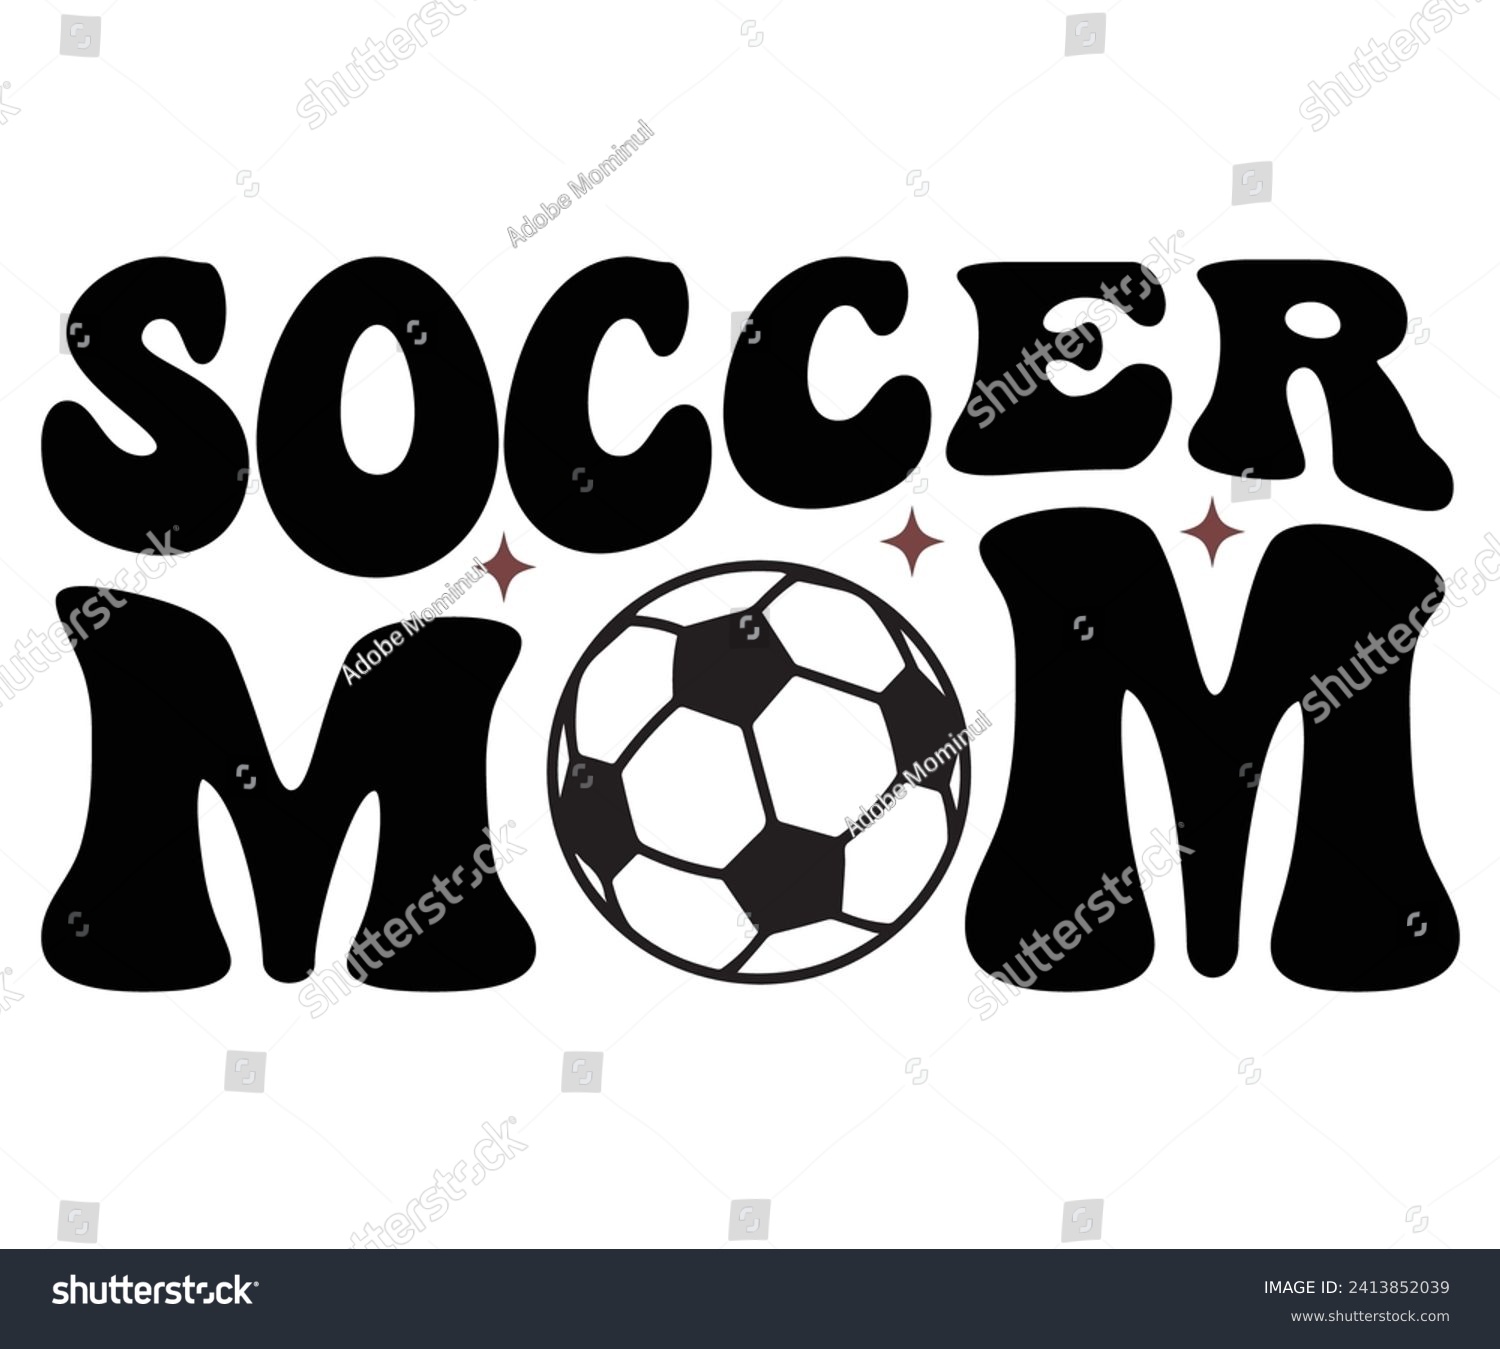 SVG of Soccer Mom Svg,,Soccer Quote Svg,Retro,Soccer Mom Shirt,Funny Shirt,Soccar Player Shirt,Game Day Shirt,Gift For Soccer,Dad of Soccer,Soccer Mascot,Soccer Football,Sport Design Svg,Soccer Cut File, svg